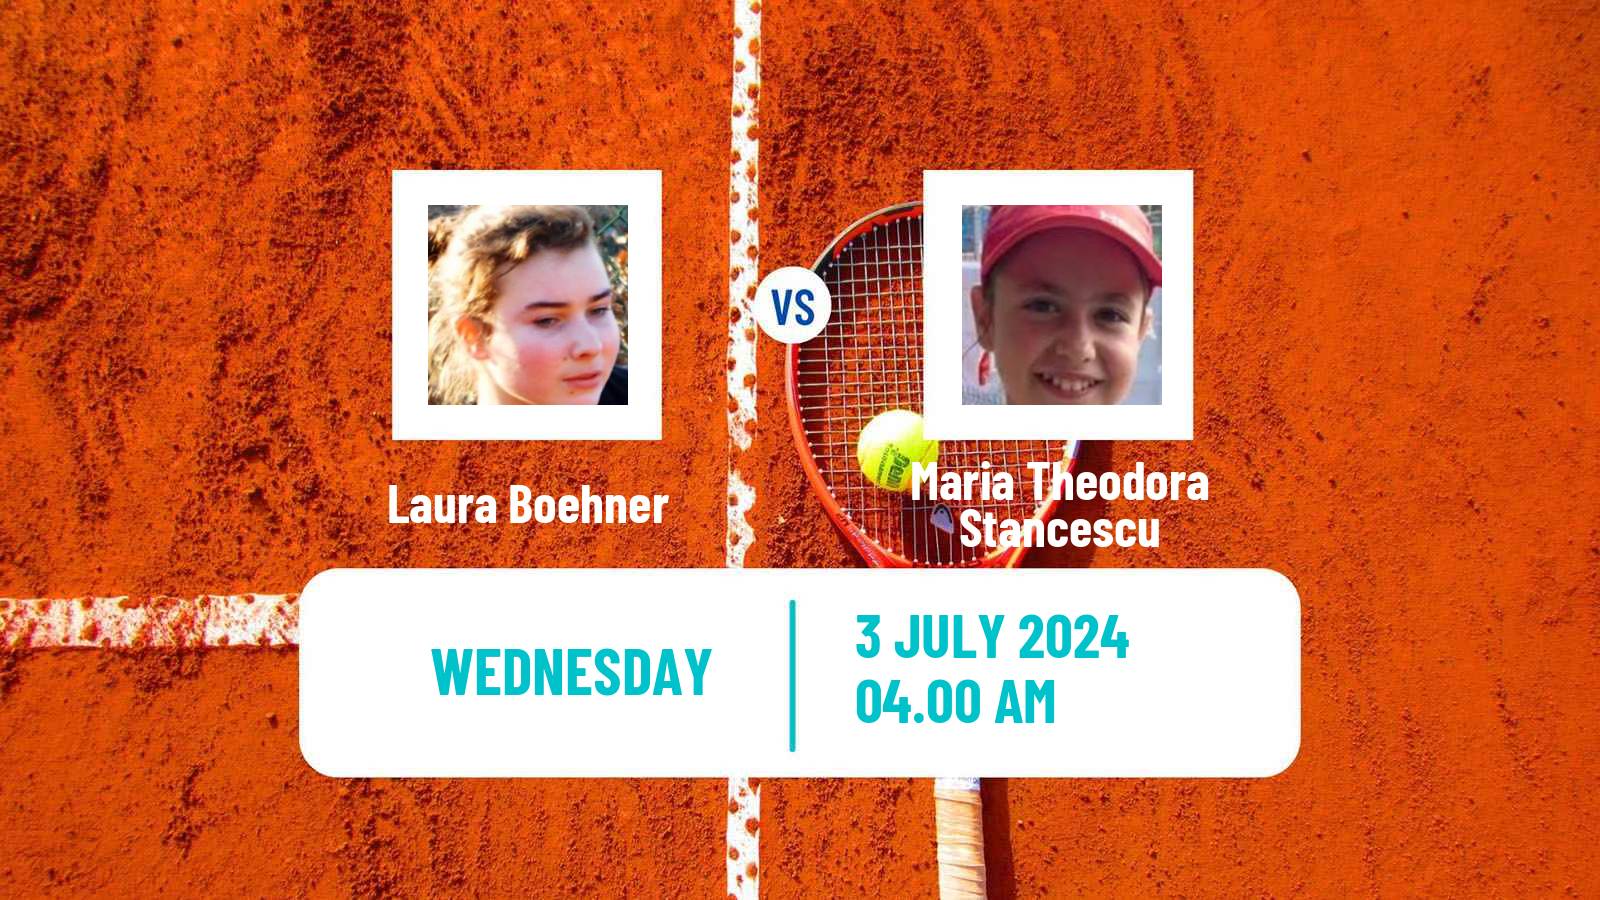 Tennis ITF W15 Galati 2 Women Laura Boehner - Maria Theodora Stancescu